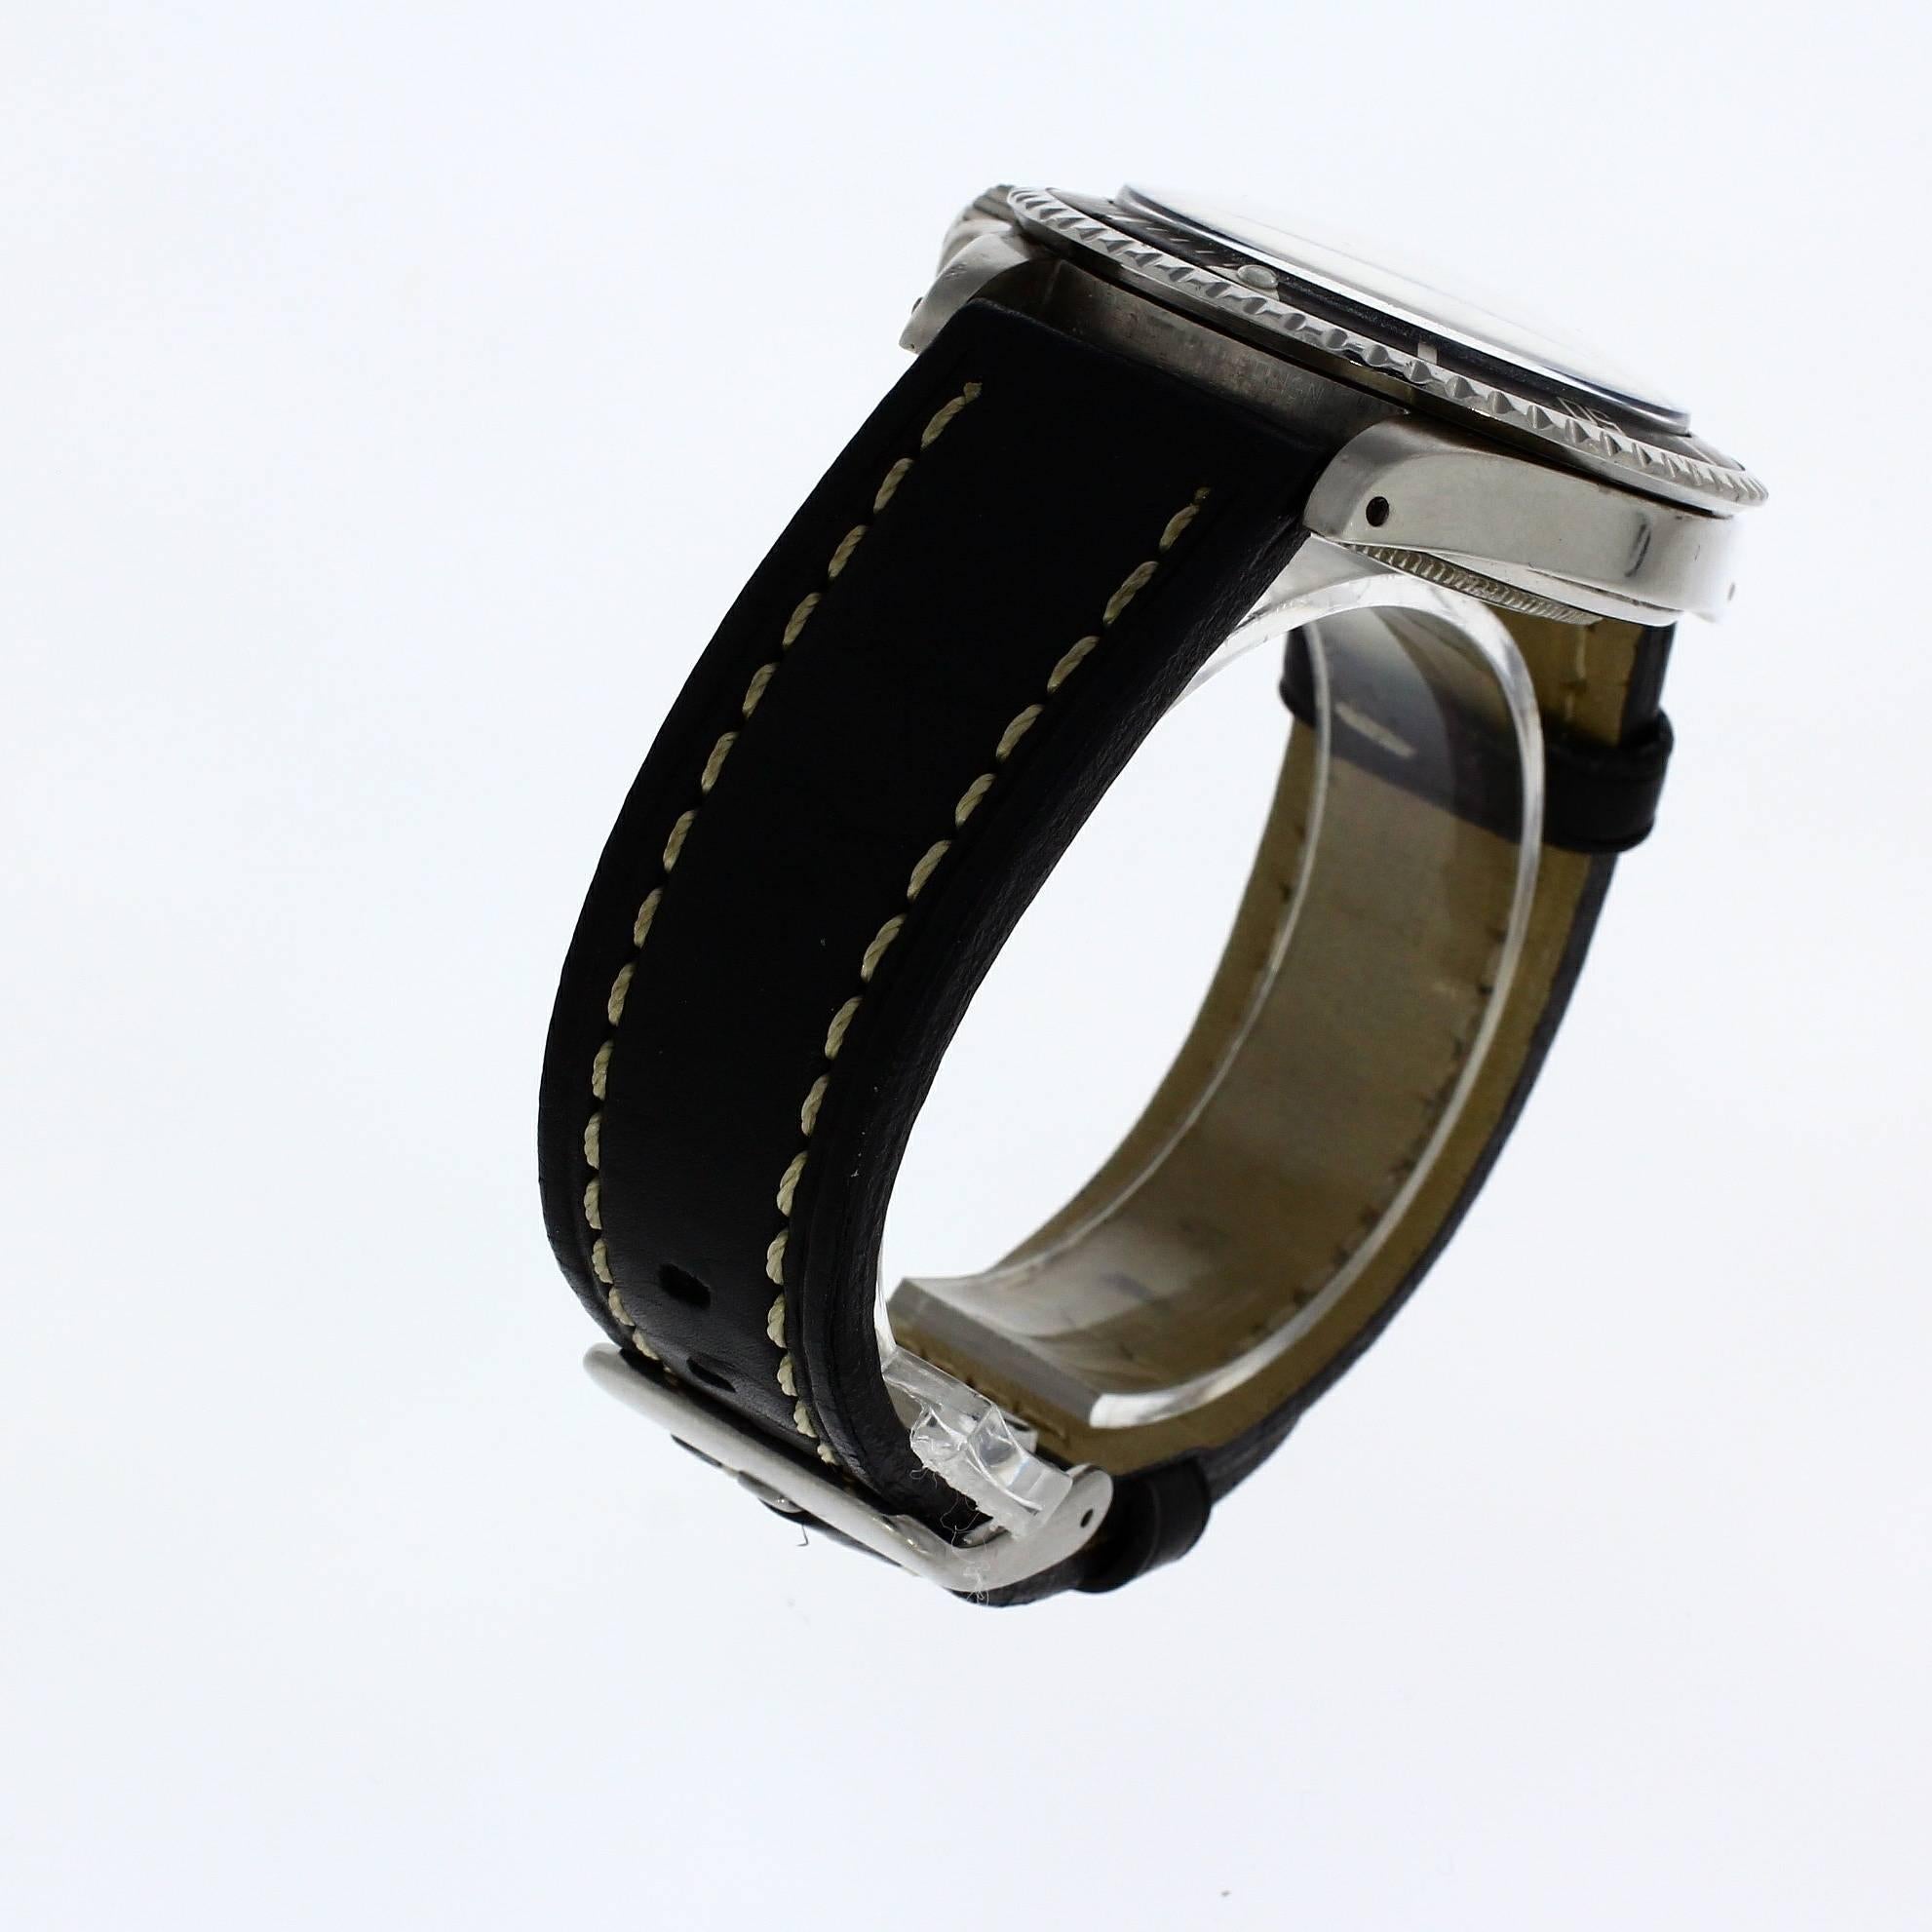 Rolex stainless steel Submariner wristwatch ref 5513, 1970  In Excellent Condition For Sale In Epsom, Surrey